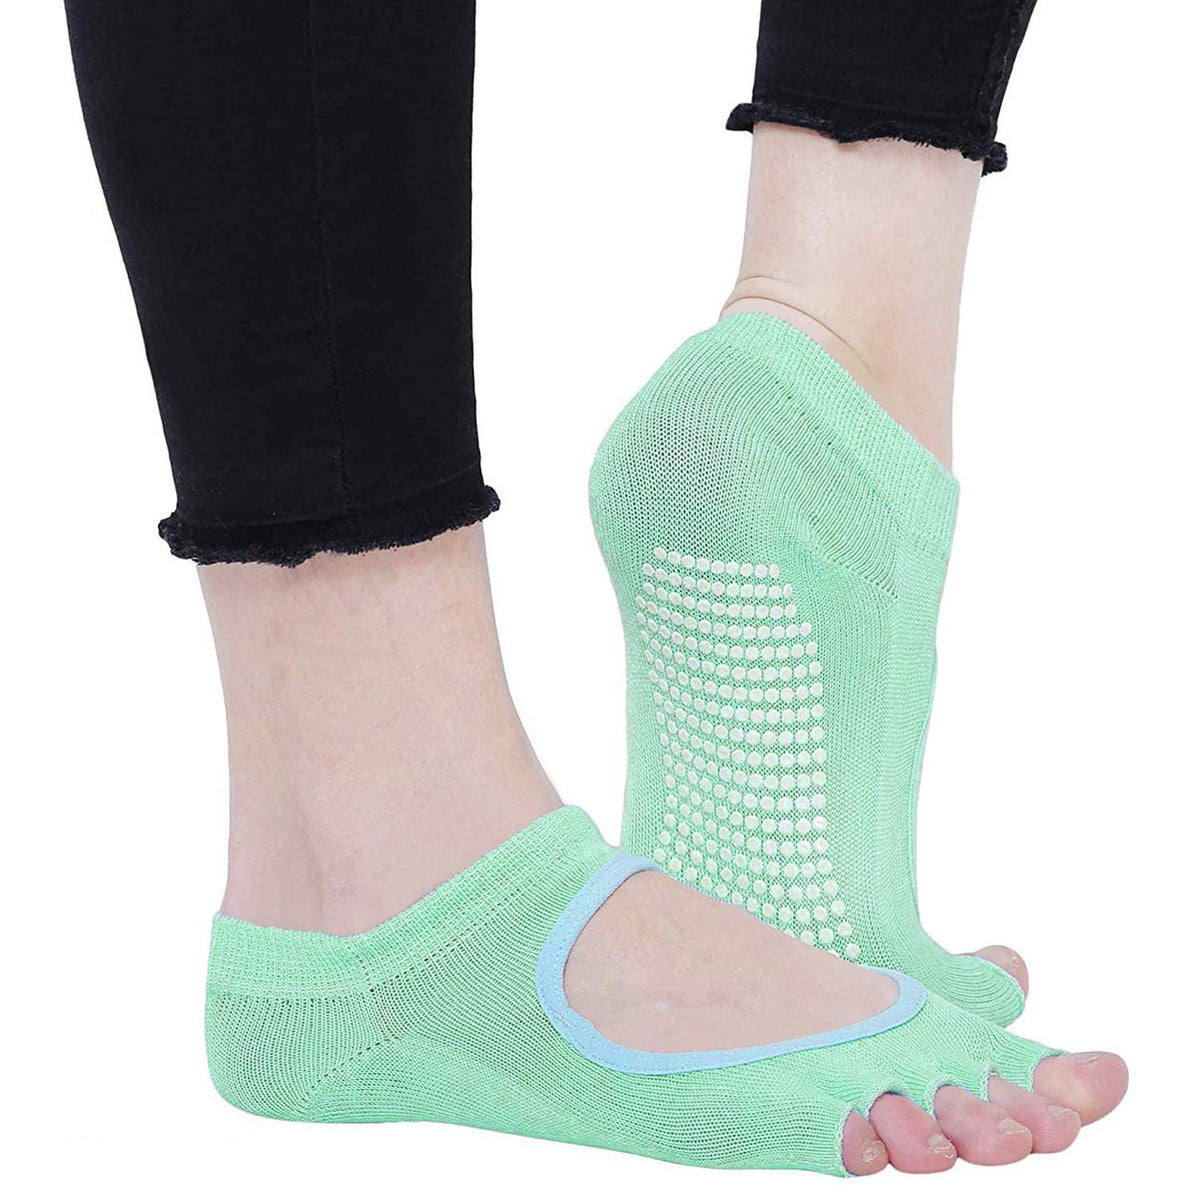 Strauss Yoga Socks, (Sea Green)